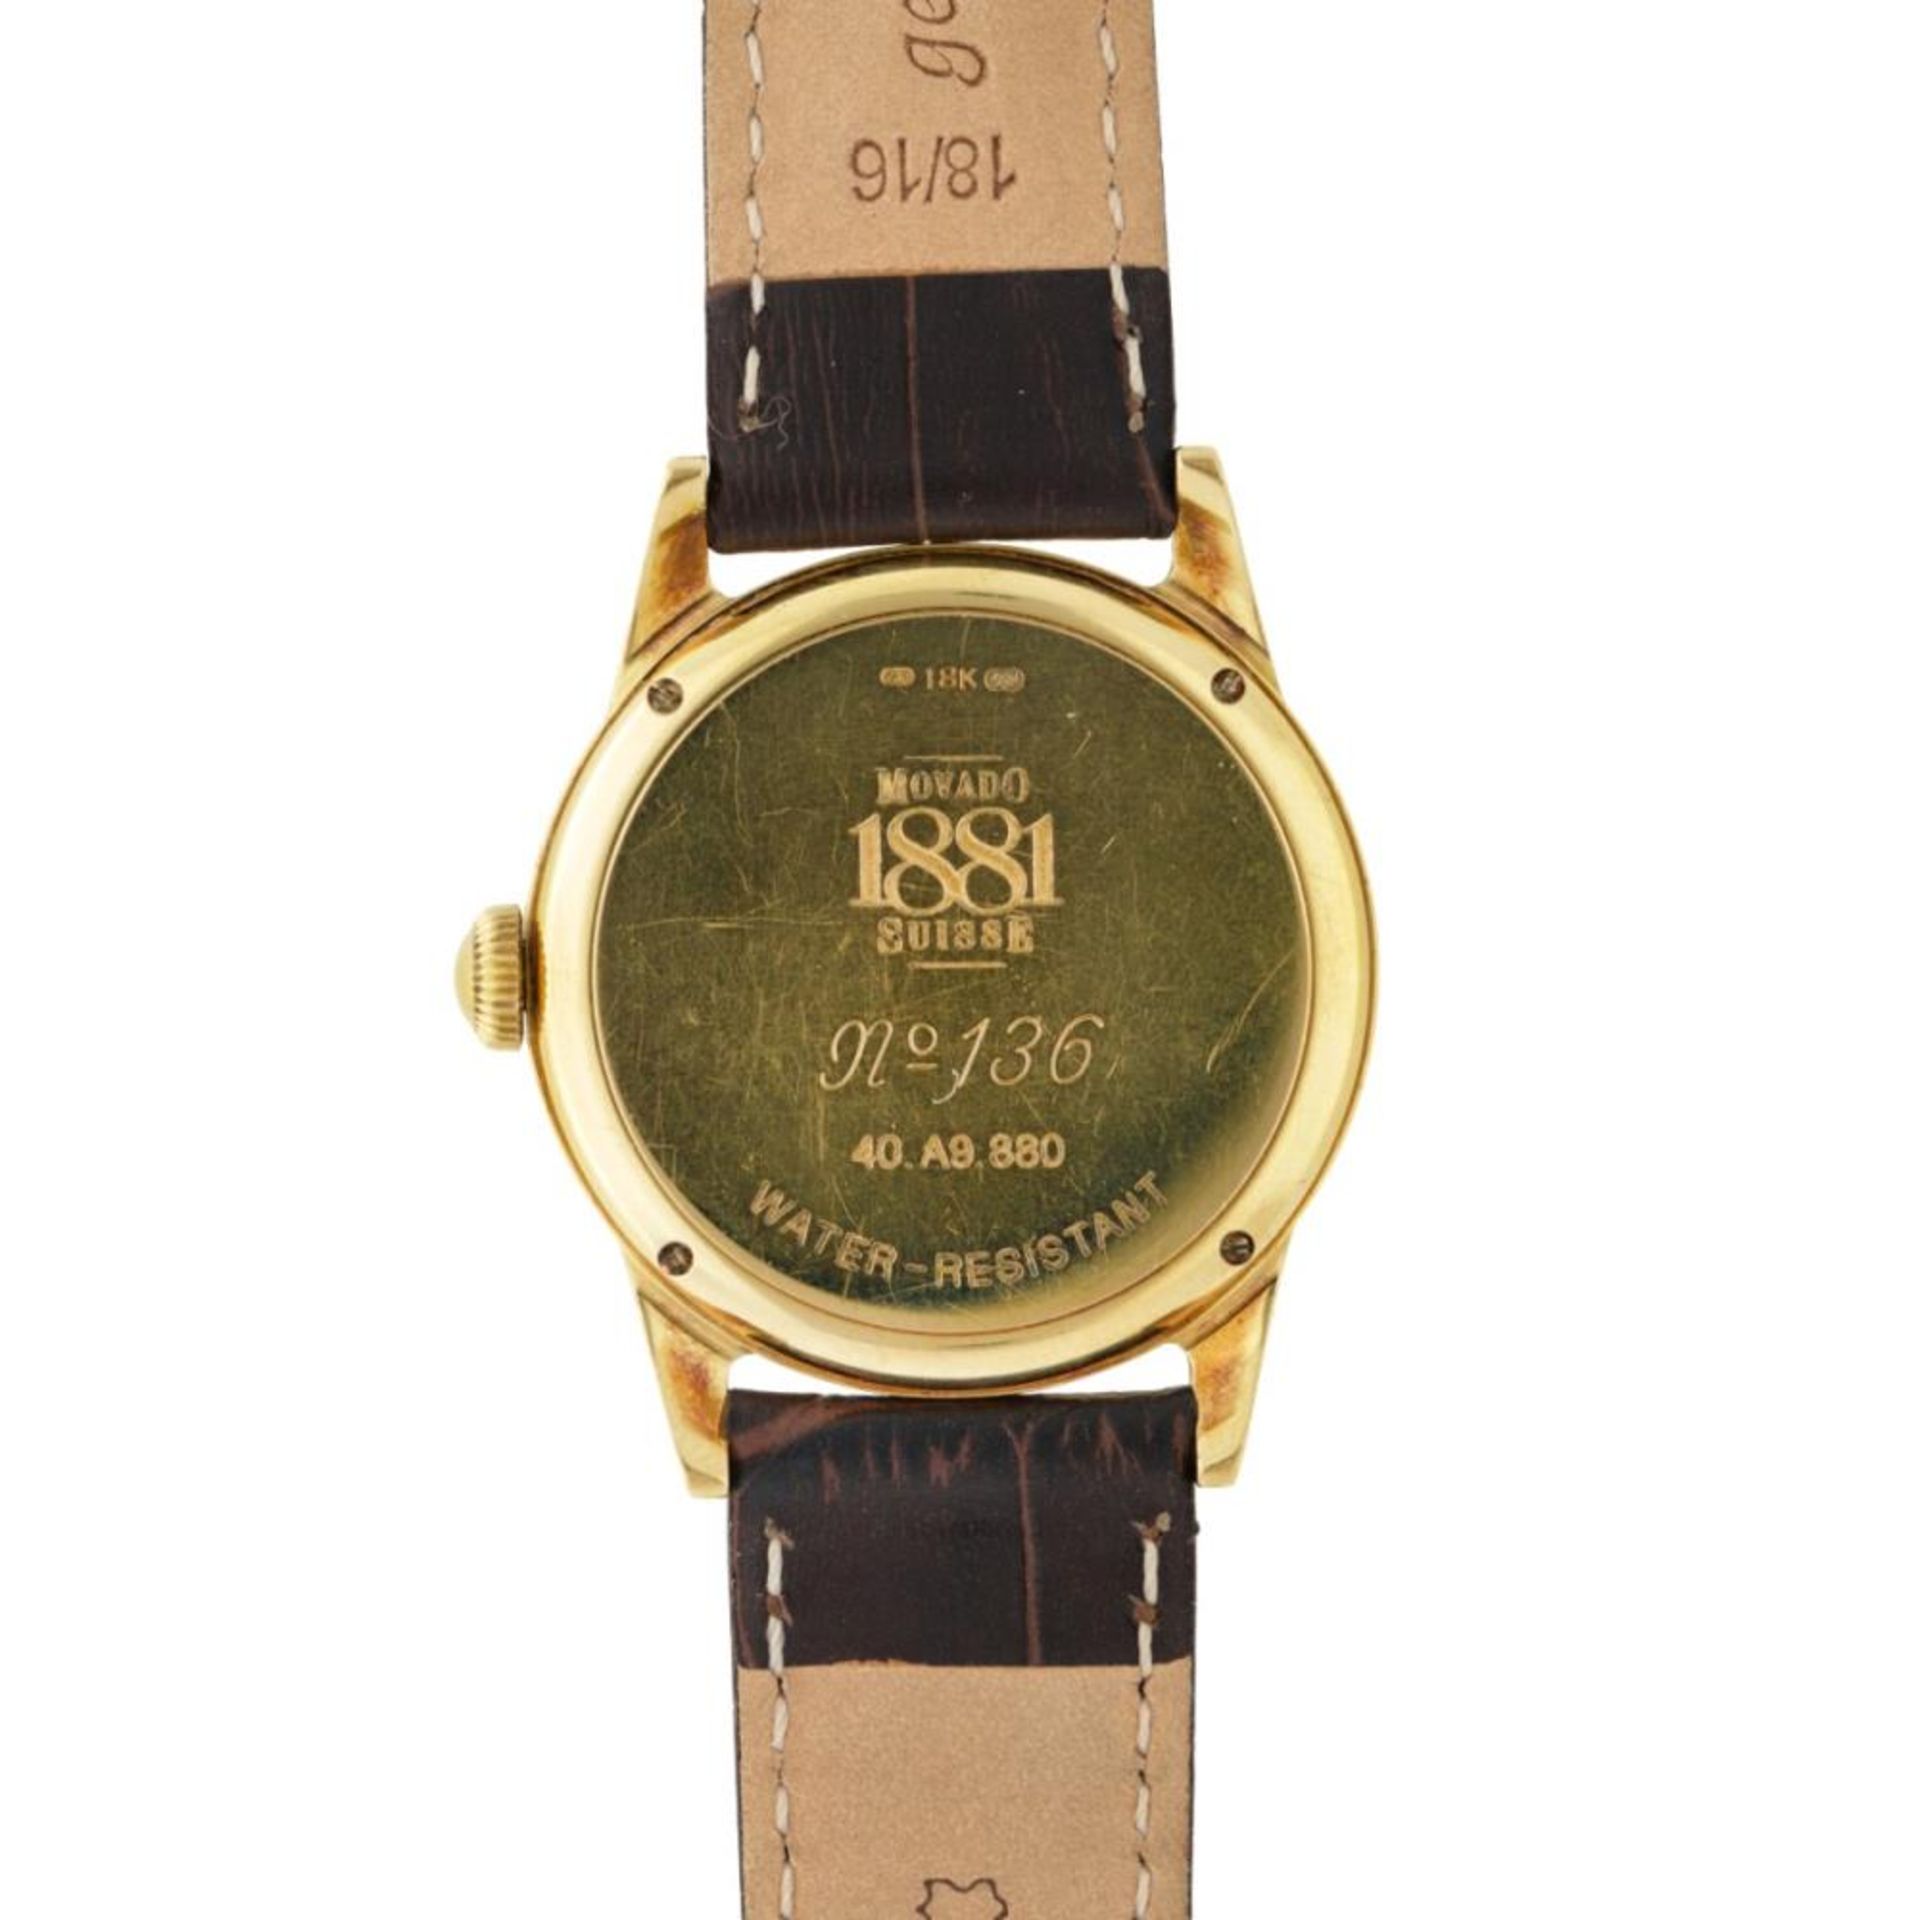 Movado 1881 40.A9.880 - Men's watch - approx. 2002. - Bild 3 aus 5